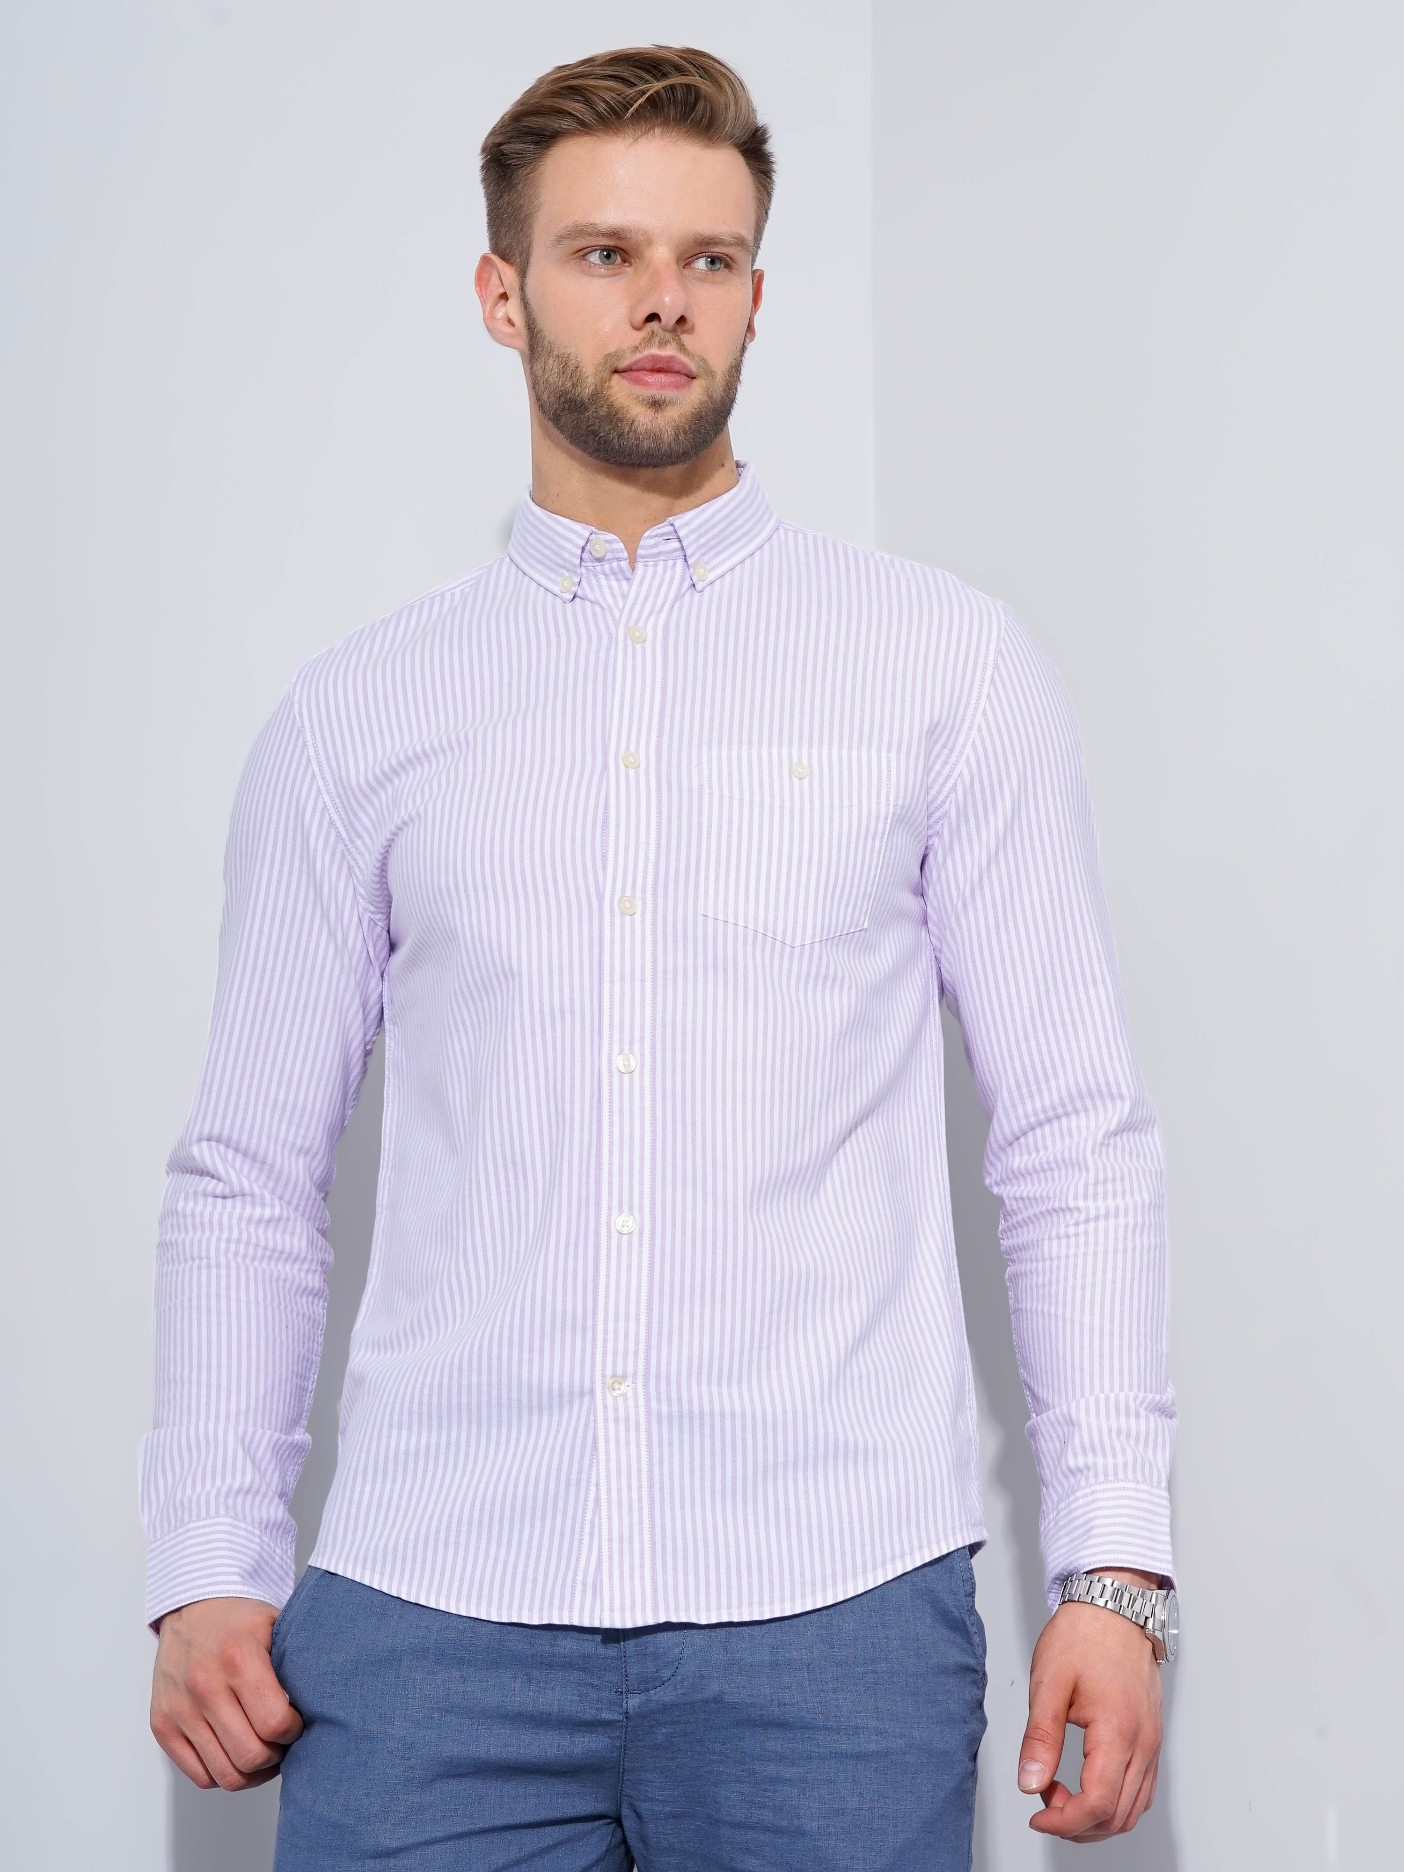 Men's Purple Striped Formal Shirts